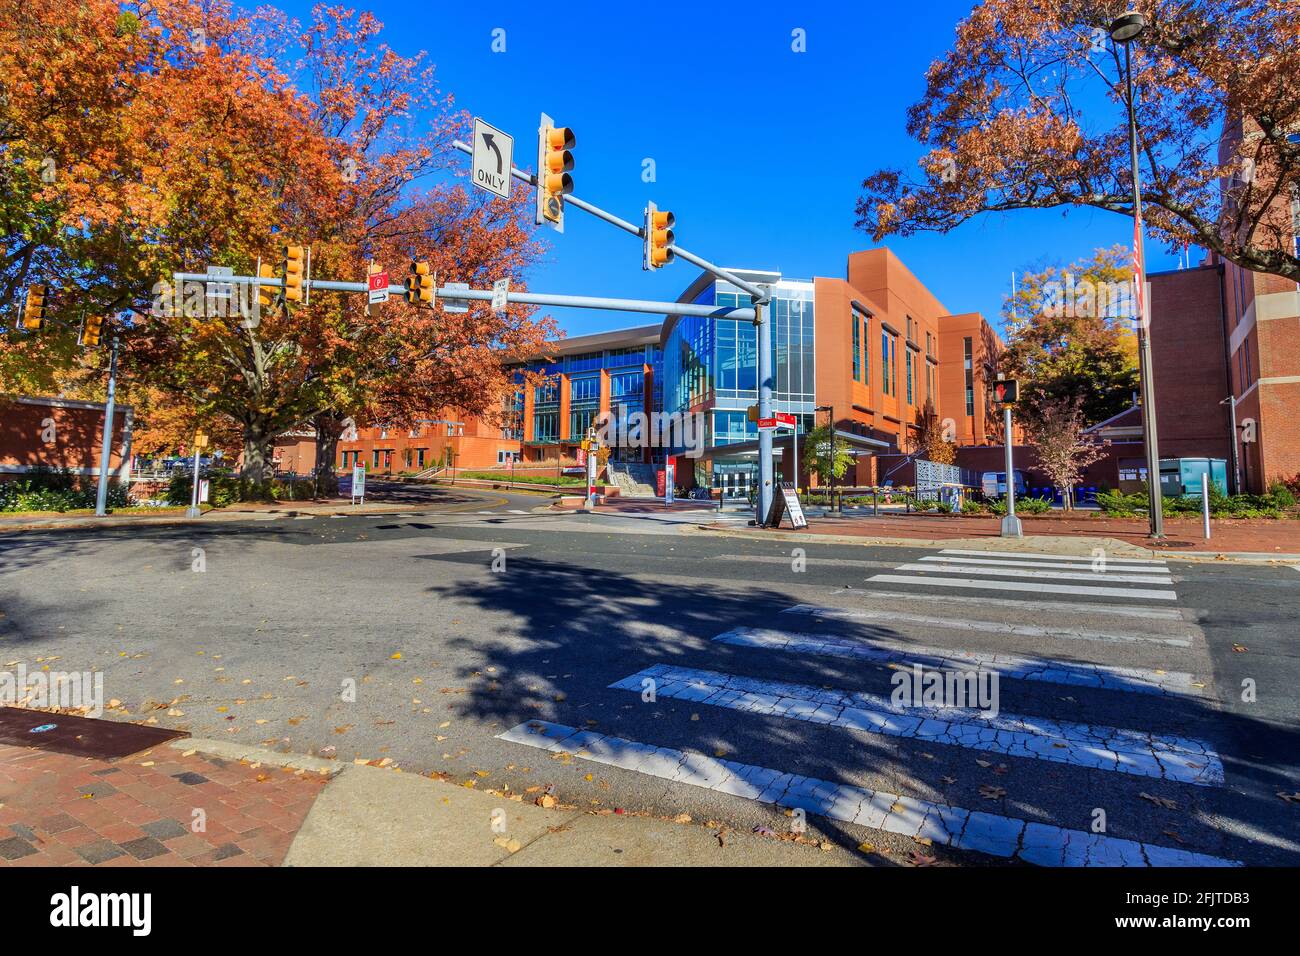 RALEIGH, NC, USA - NOVEMBER 24: Talley Student Union on November 24, 2017 at North Carolina State University in Raleigh, North Carolina. Stock Photo